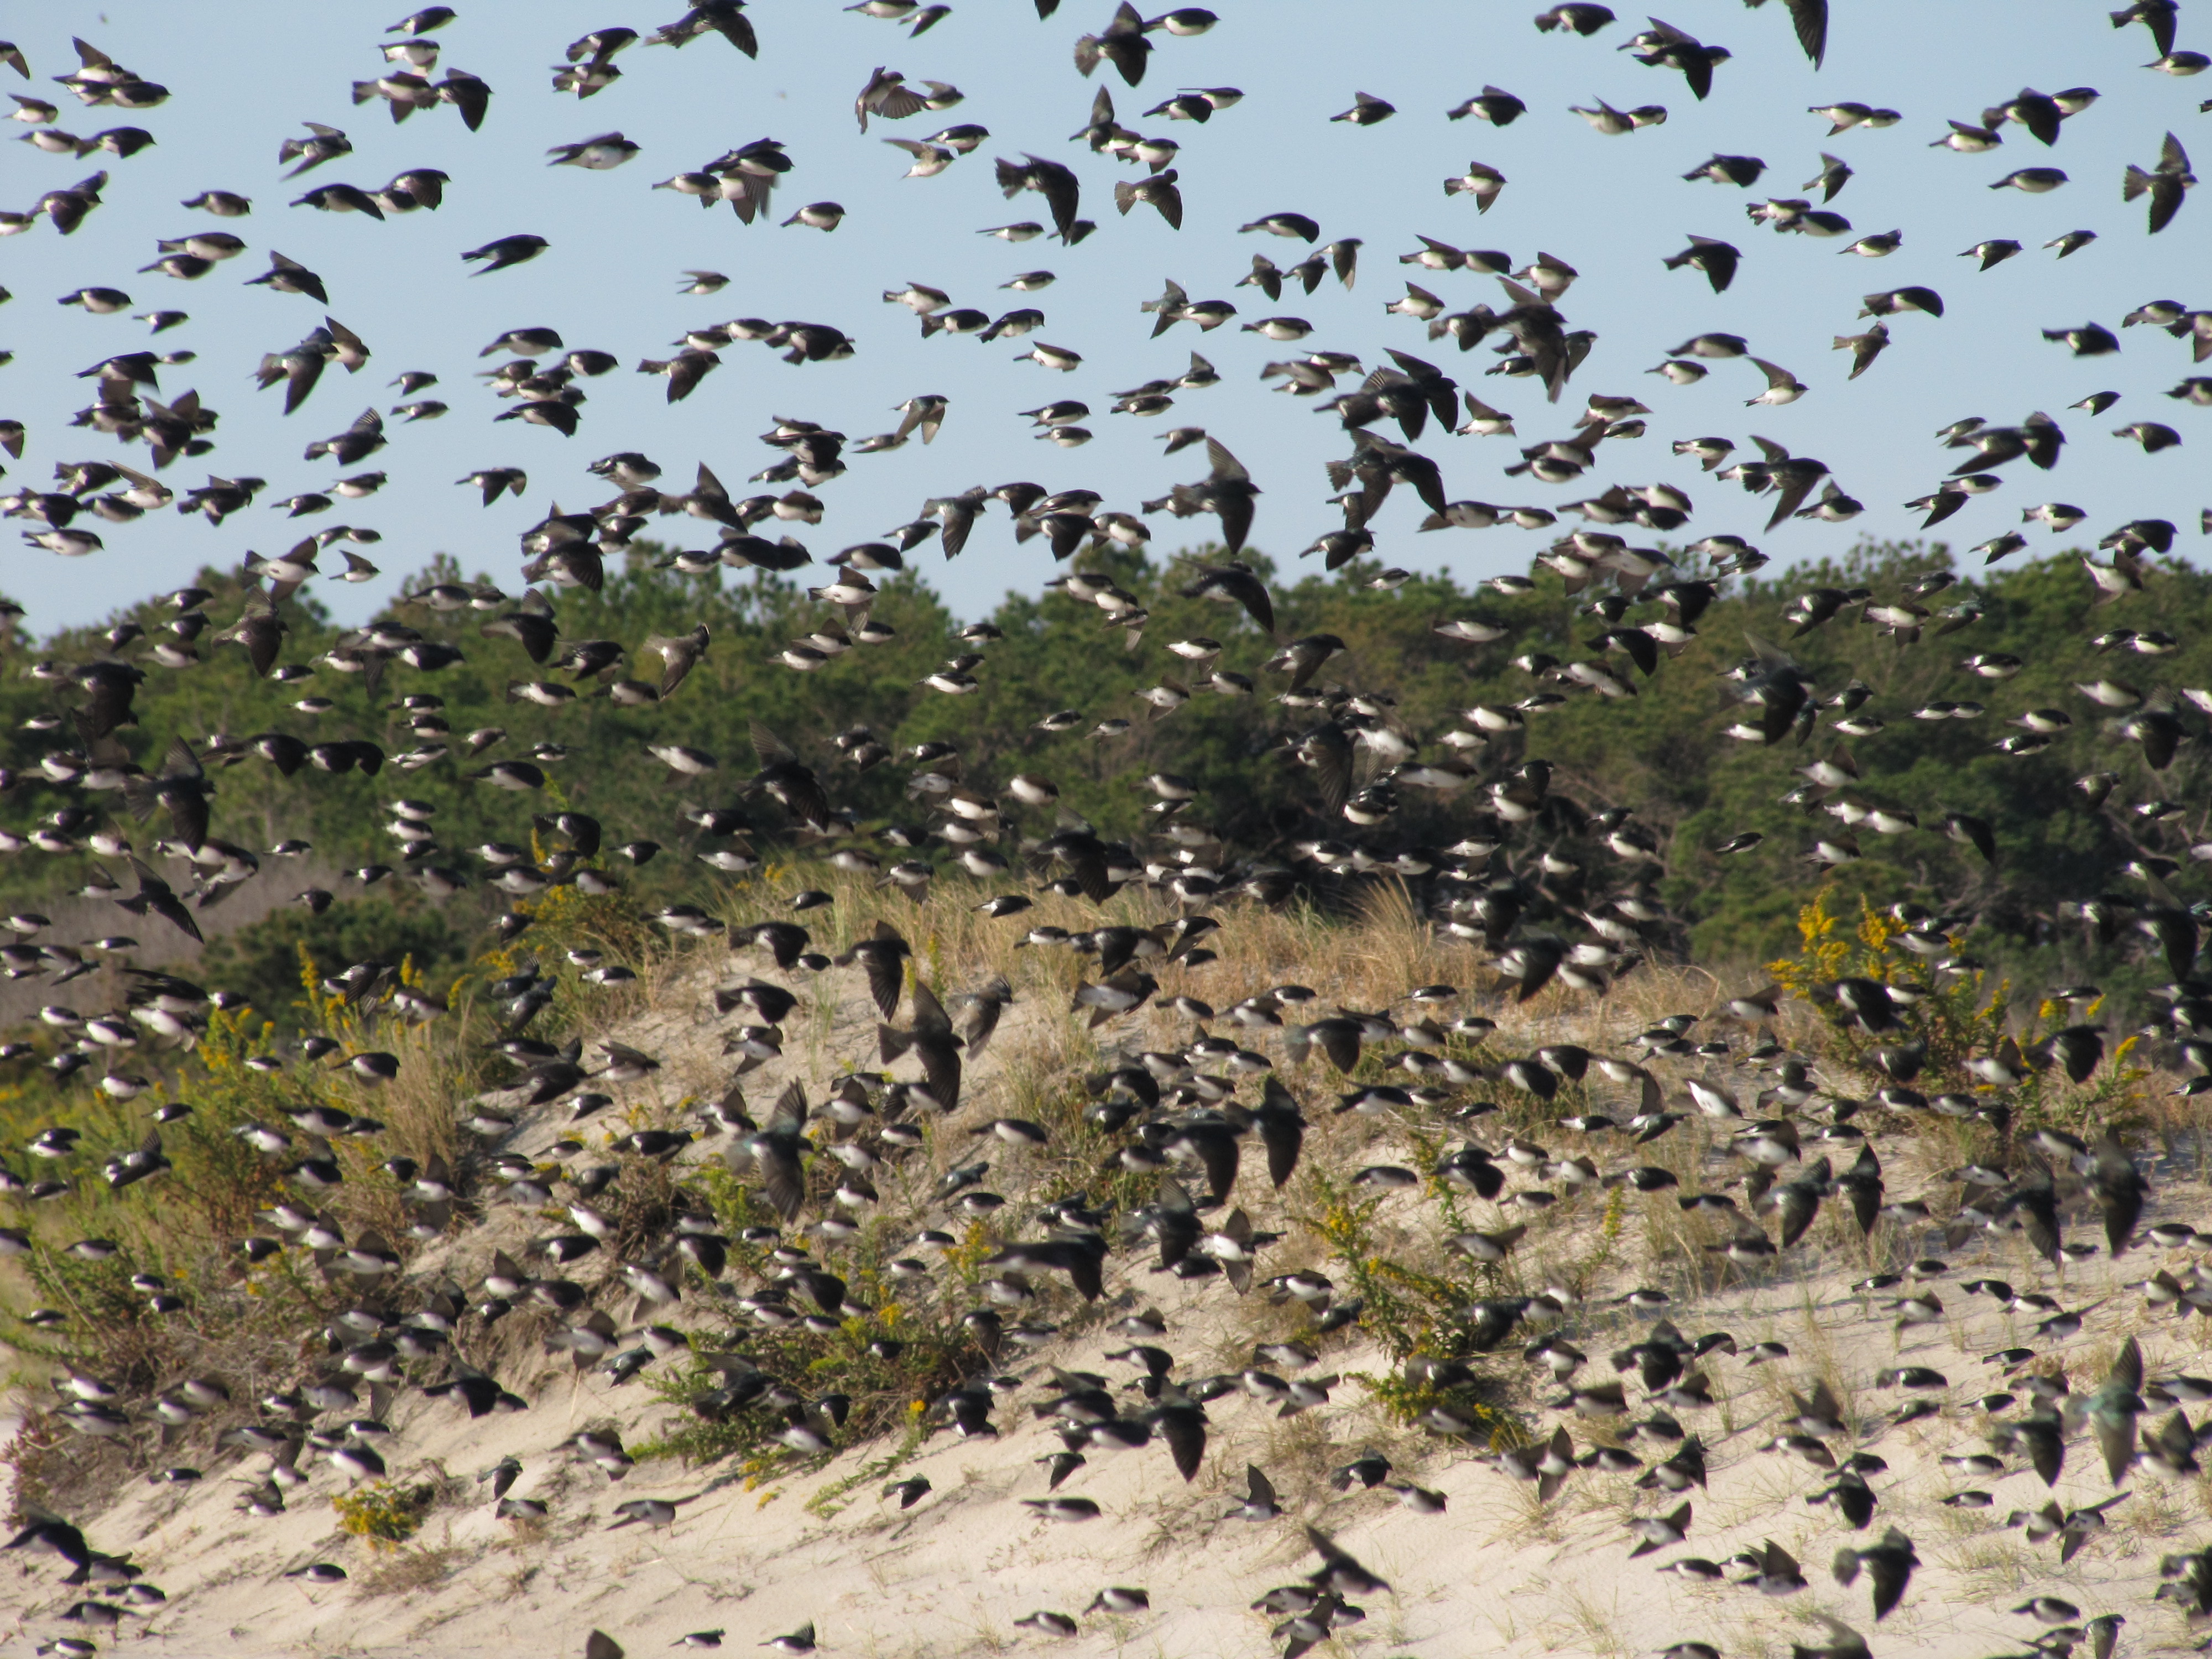 Tree Swallows migrating along the beach at Assateague